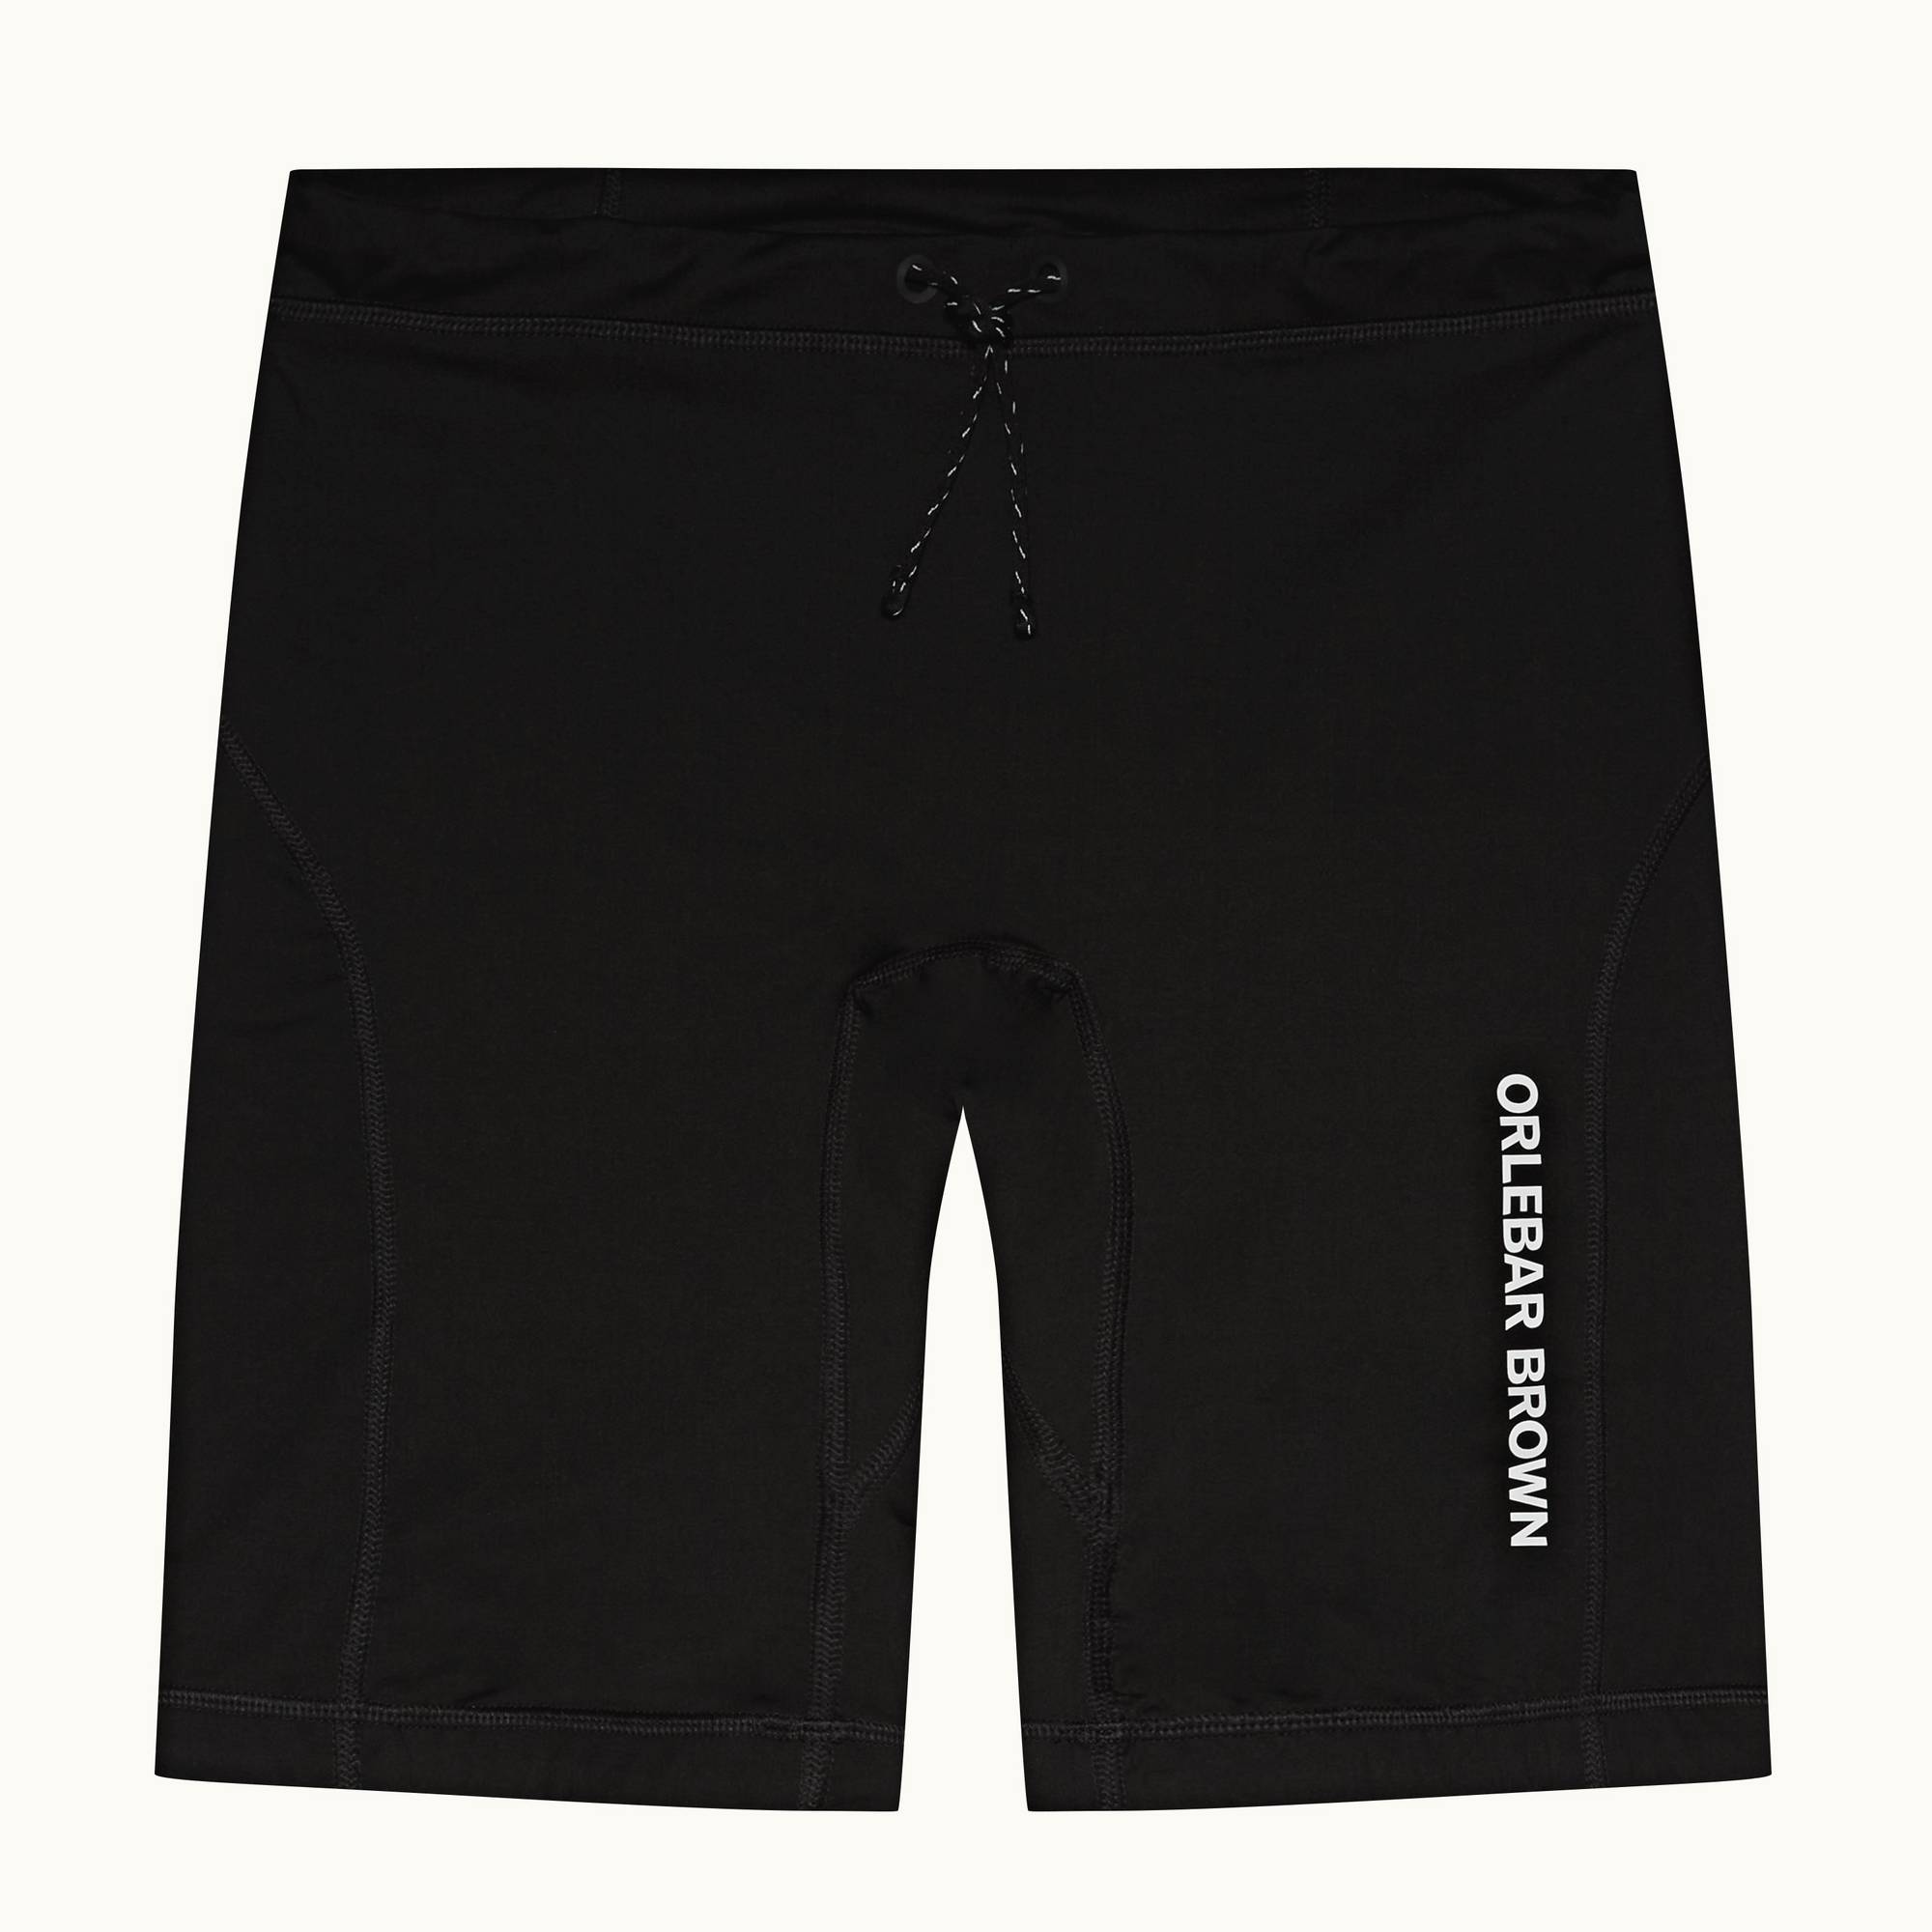 Daymer - Mens Black Hot Jammer Swim Shorts